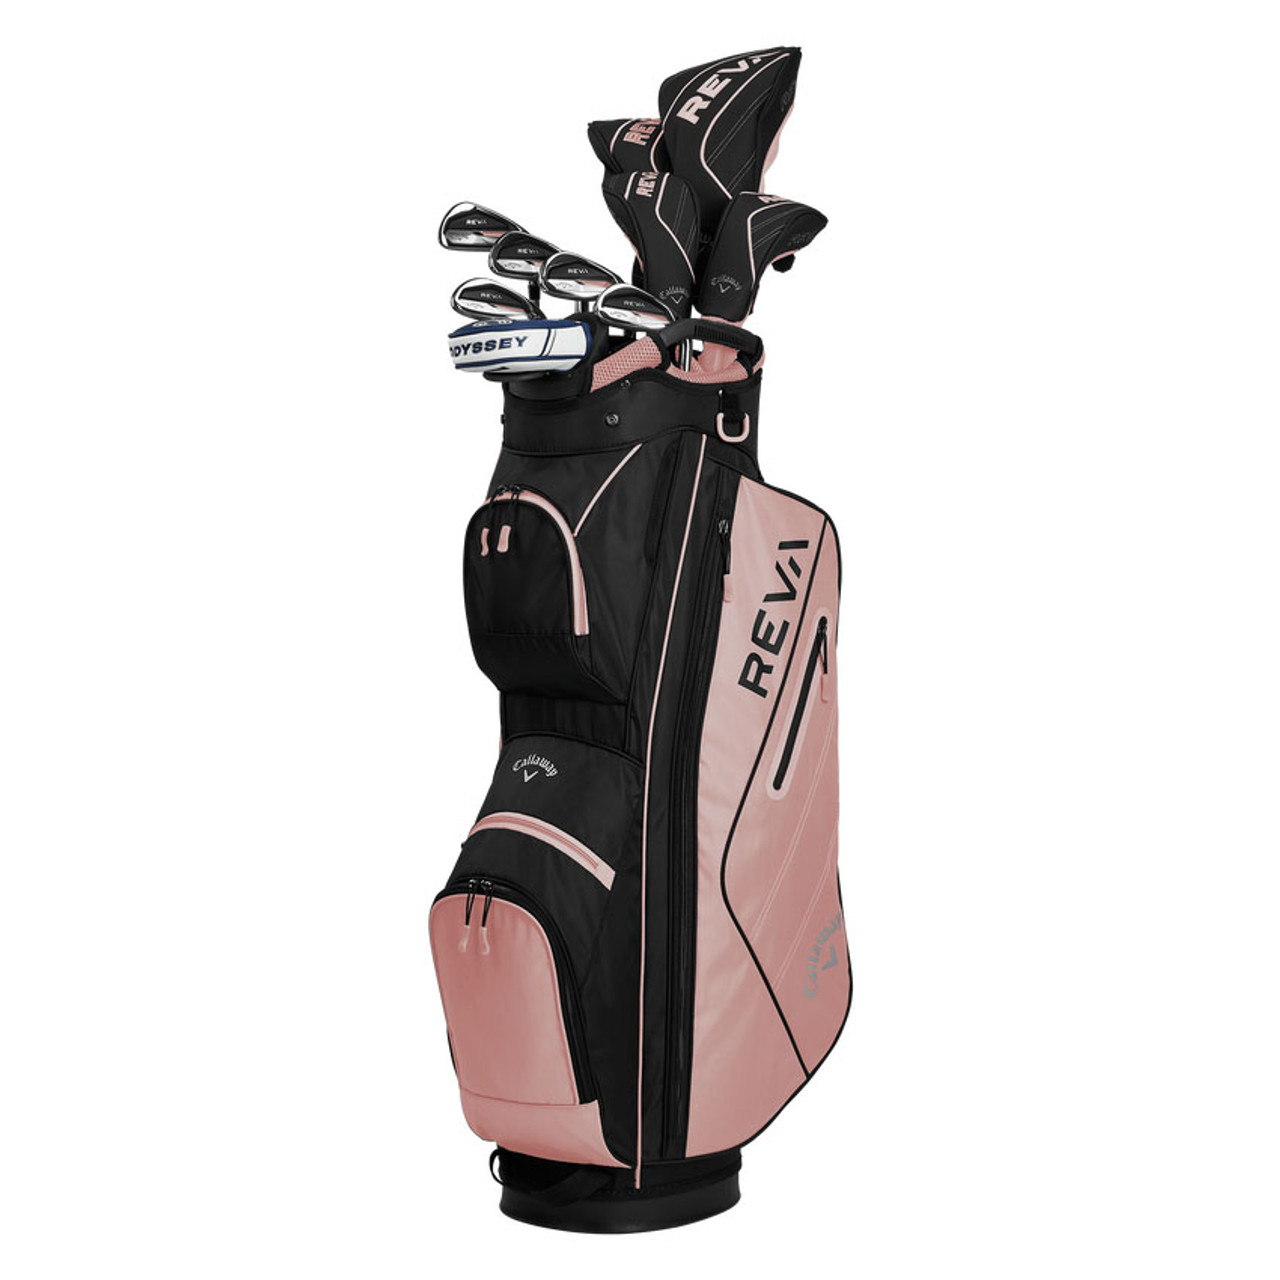 Reva 11-Piece Complete Set, Black - Callaway Golf Clubs